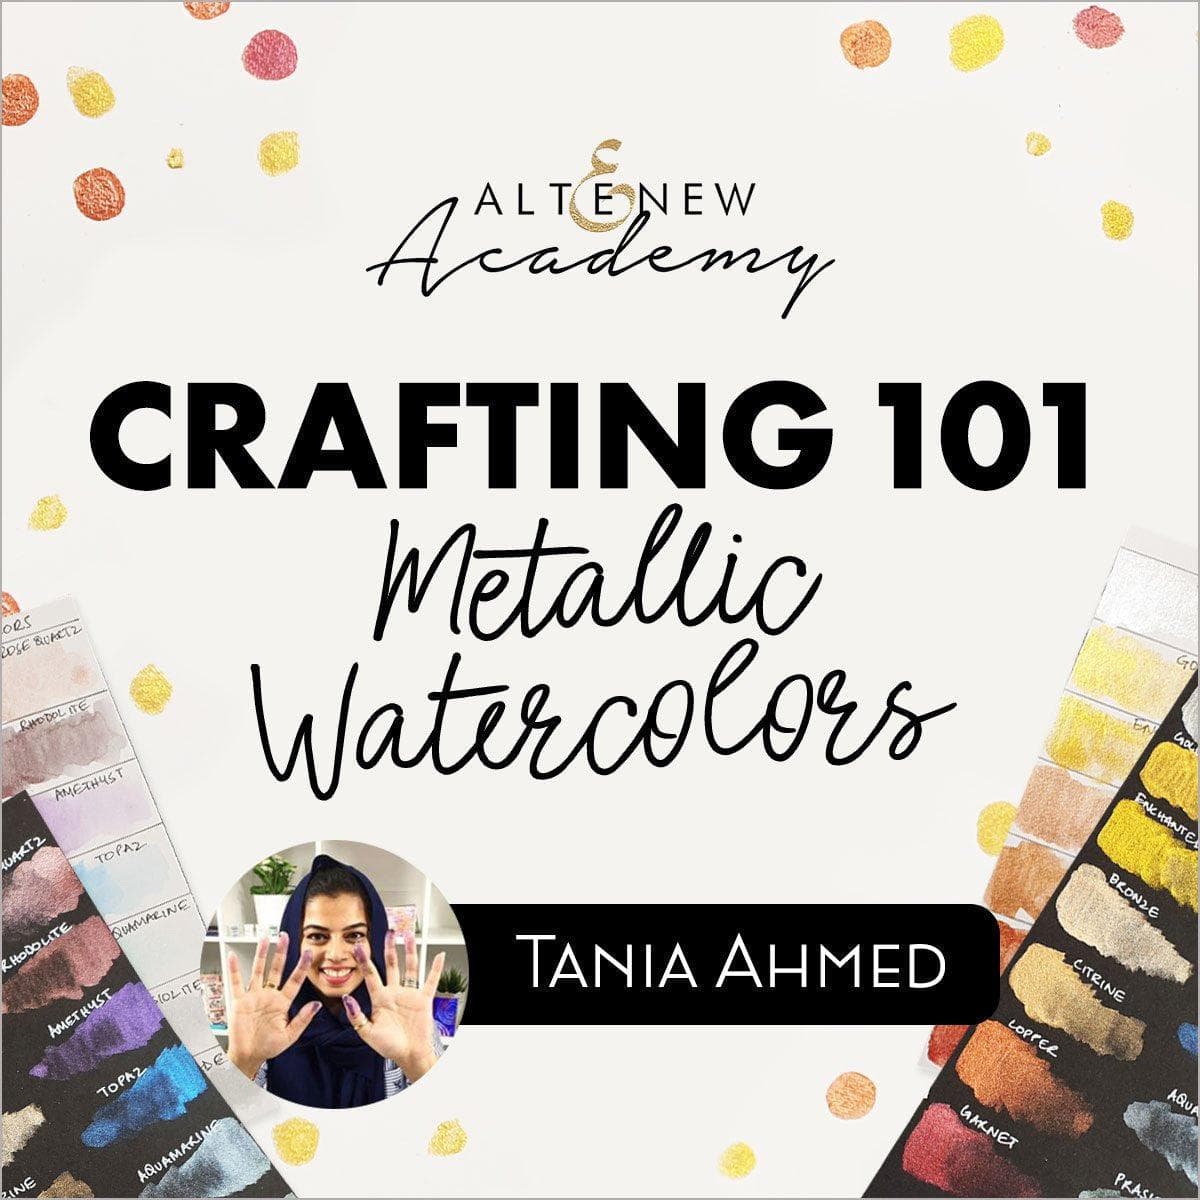 Altenew Class Crafting 101 - Metallic Watercolors Online Cardmaking Class